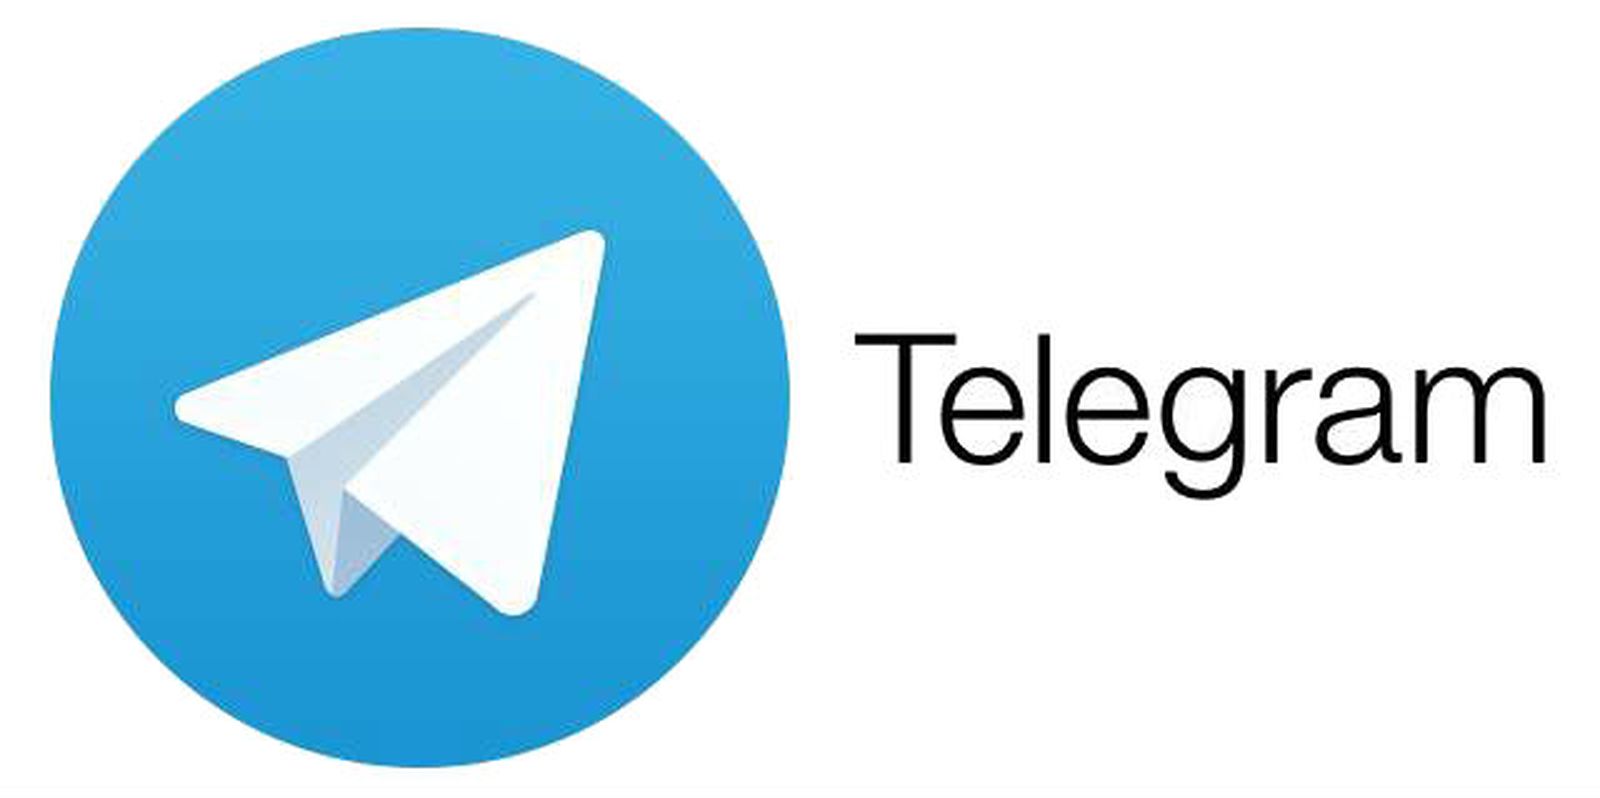 free telegram subscribers apk